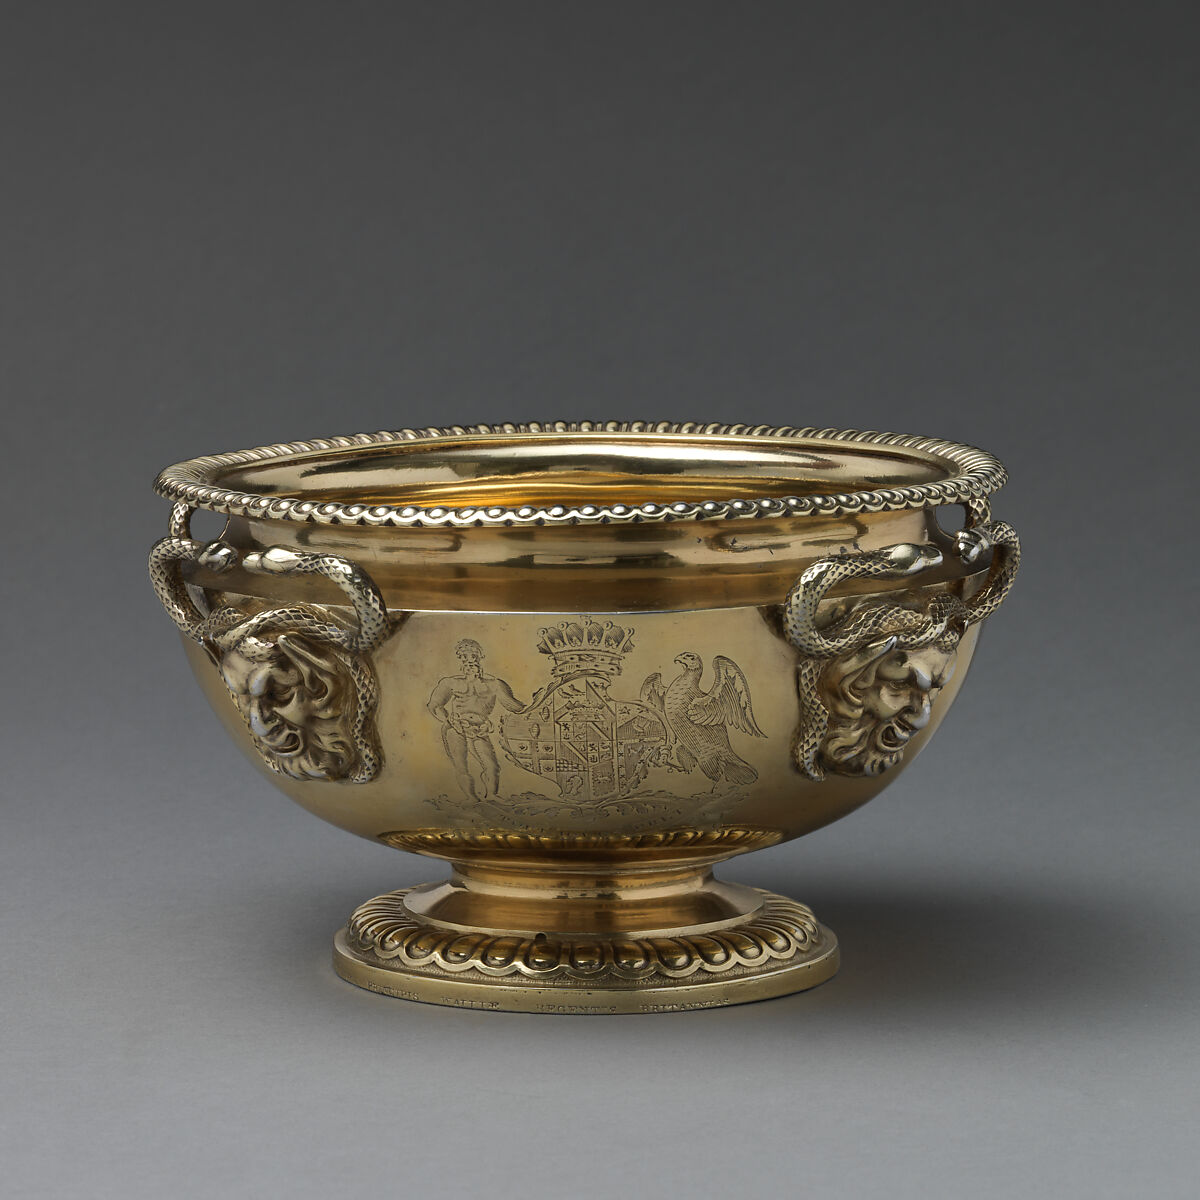 Sugar bowl (part of a set), Paul Storr (British, 1771–1844), Silver-gilt, British, London 